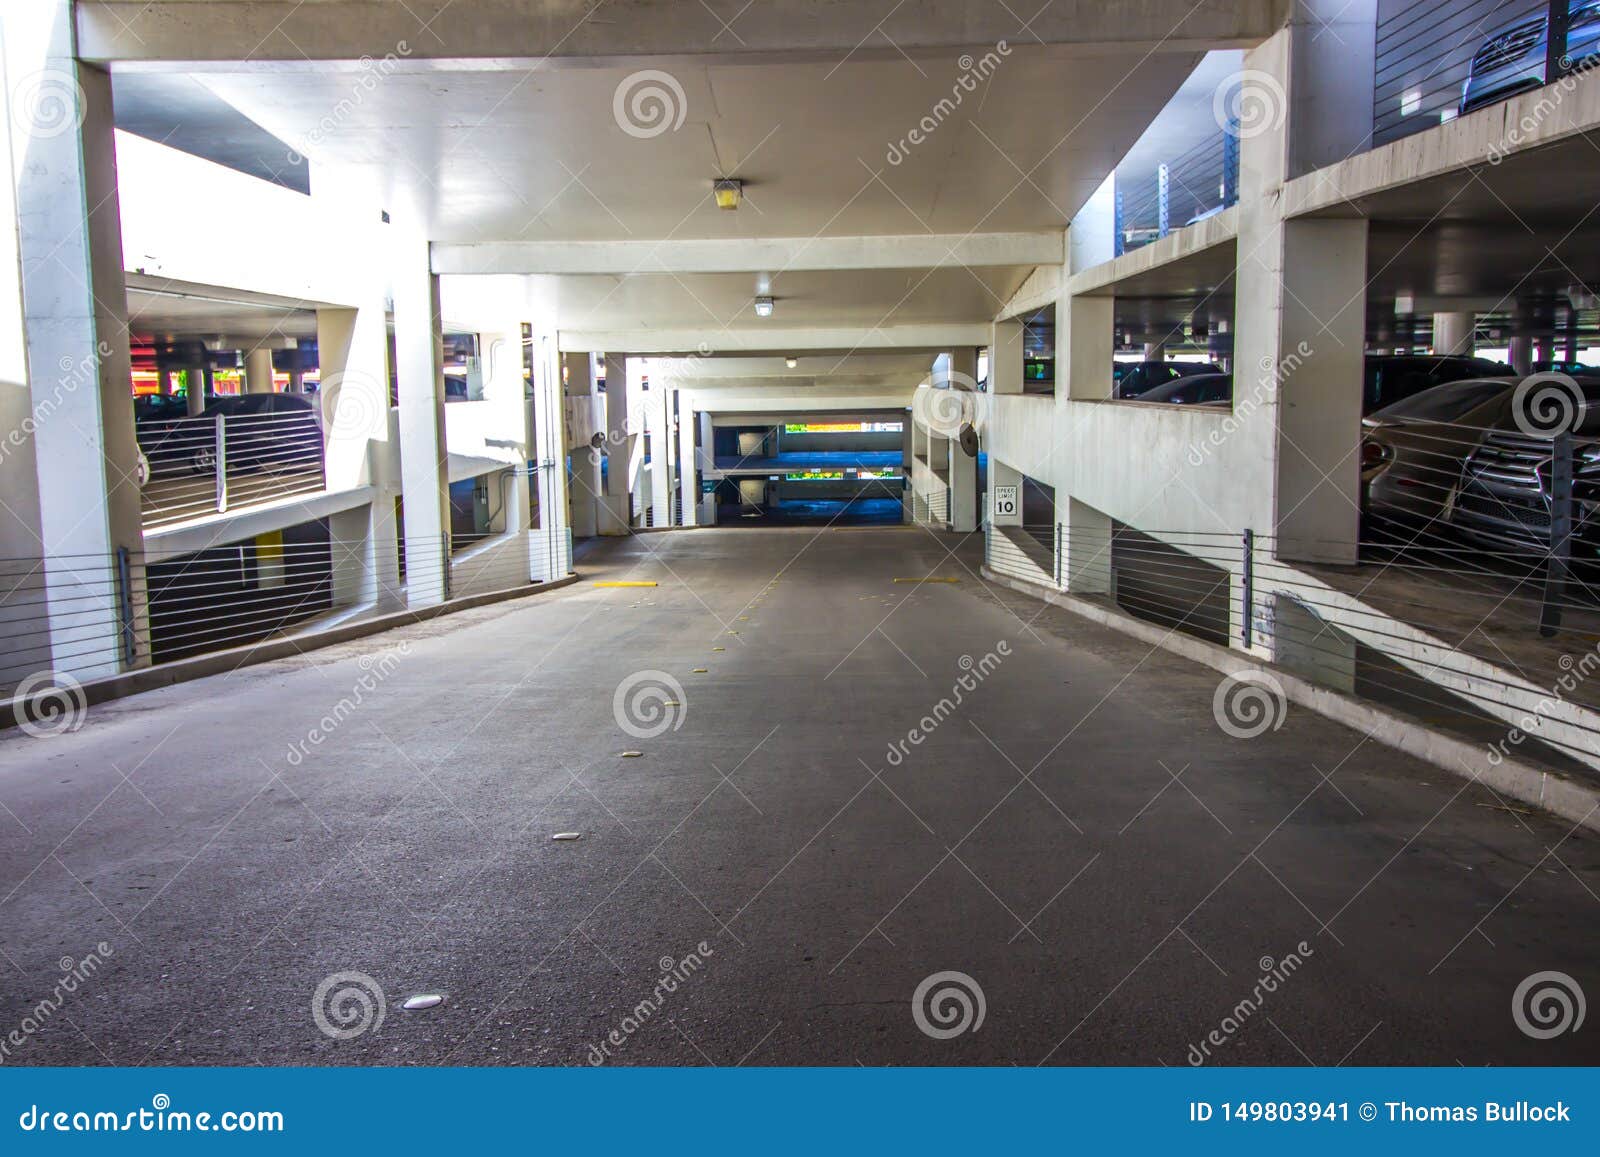 Multi Level Parking Garage Ramp Stock Image - Image of exit ...